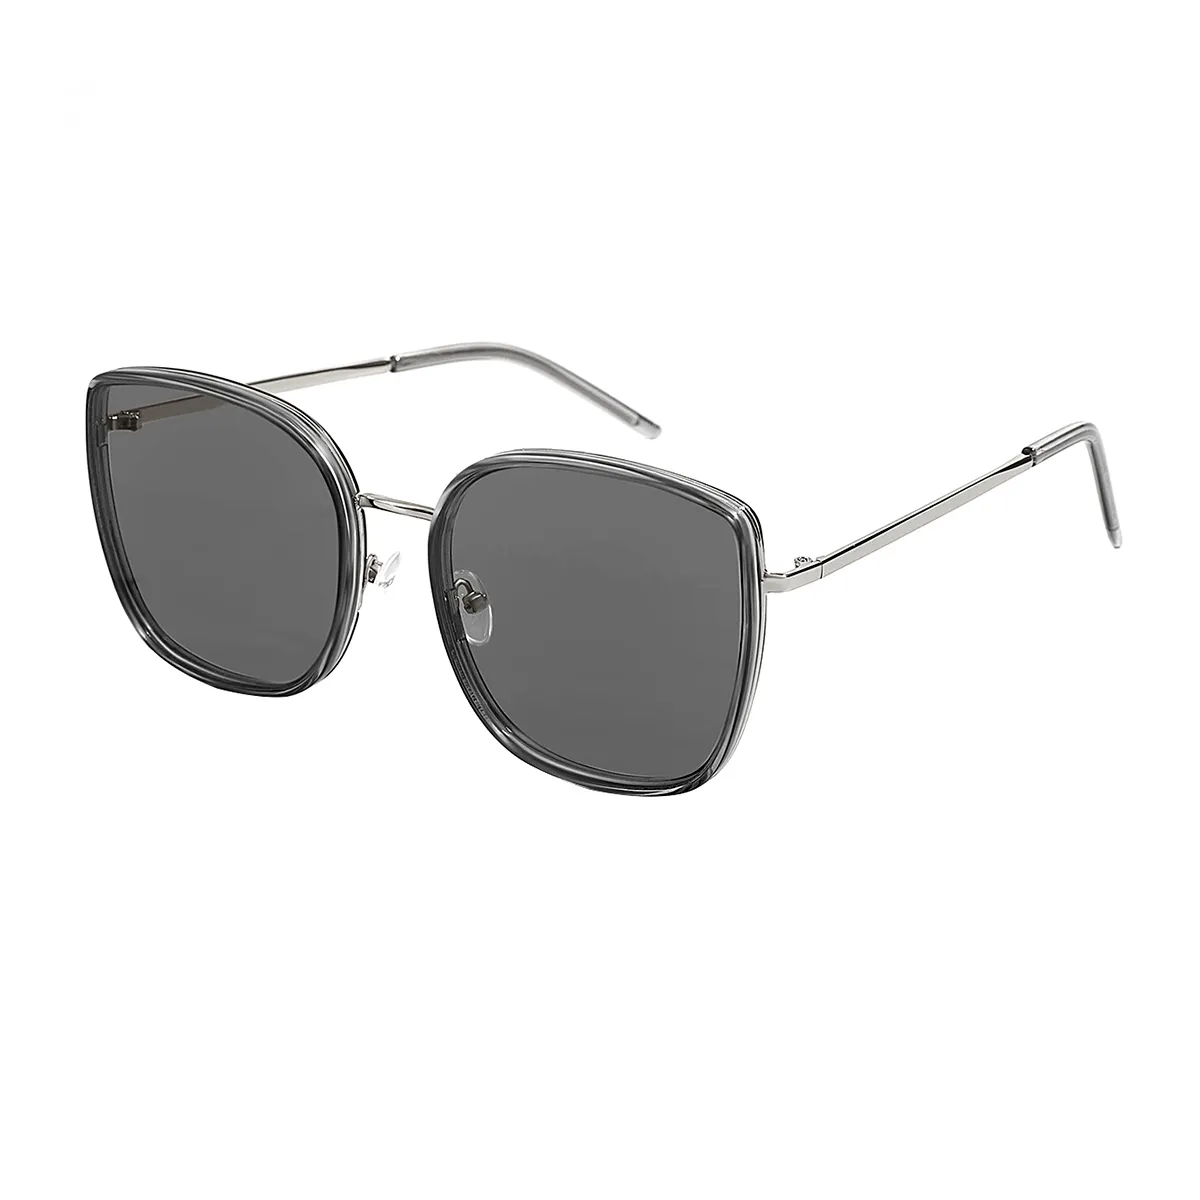 Hannah - Square Gray Sunglasses for Women